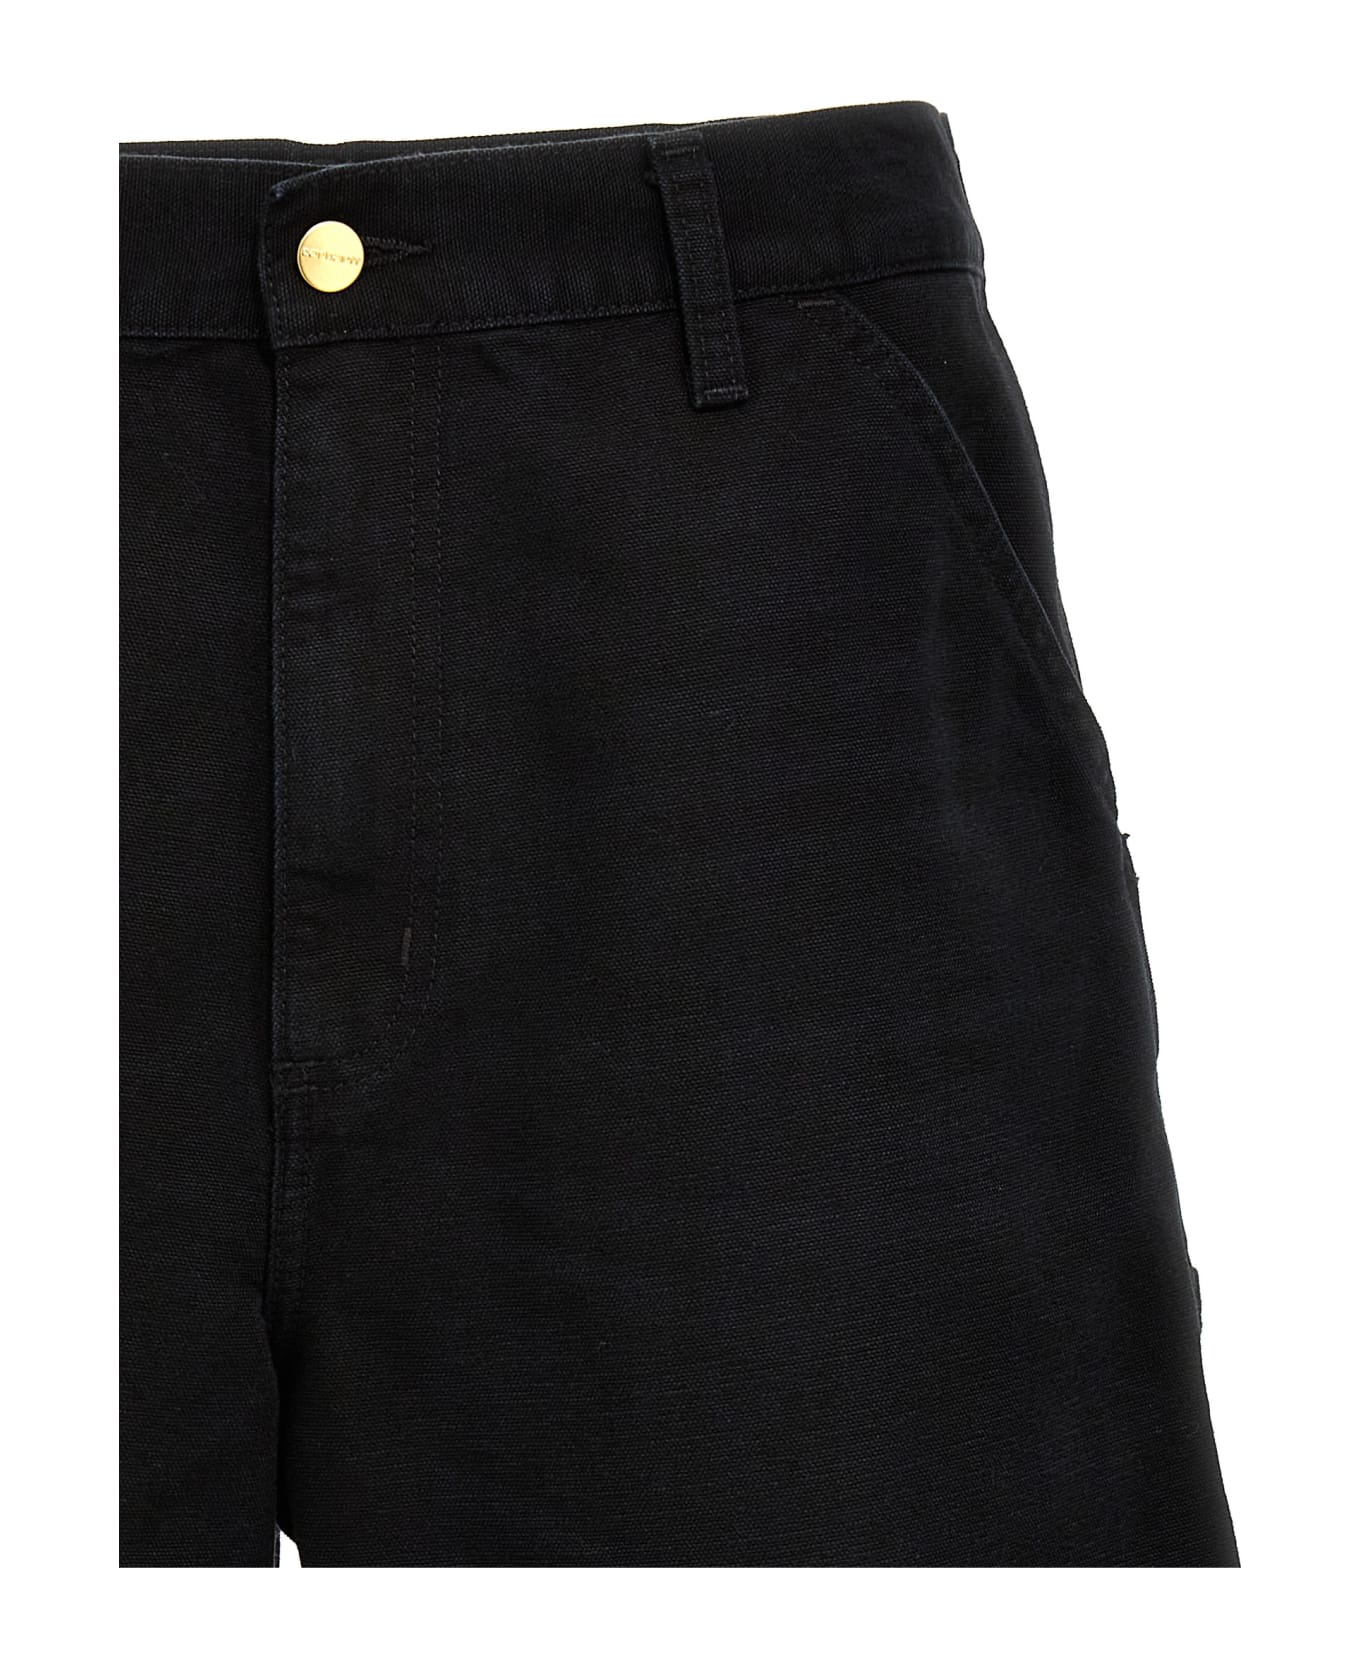 Carhartt 'single Knee' Bermuda Shorts - Black  